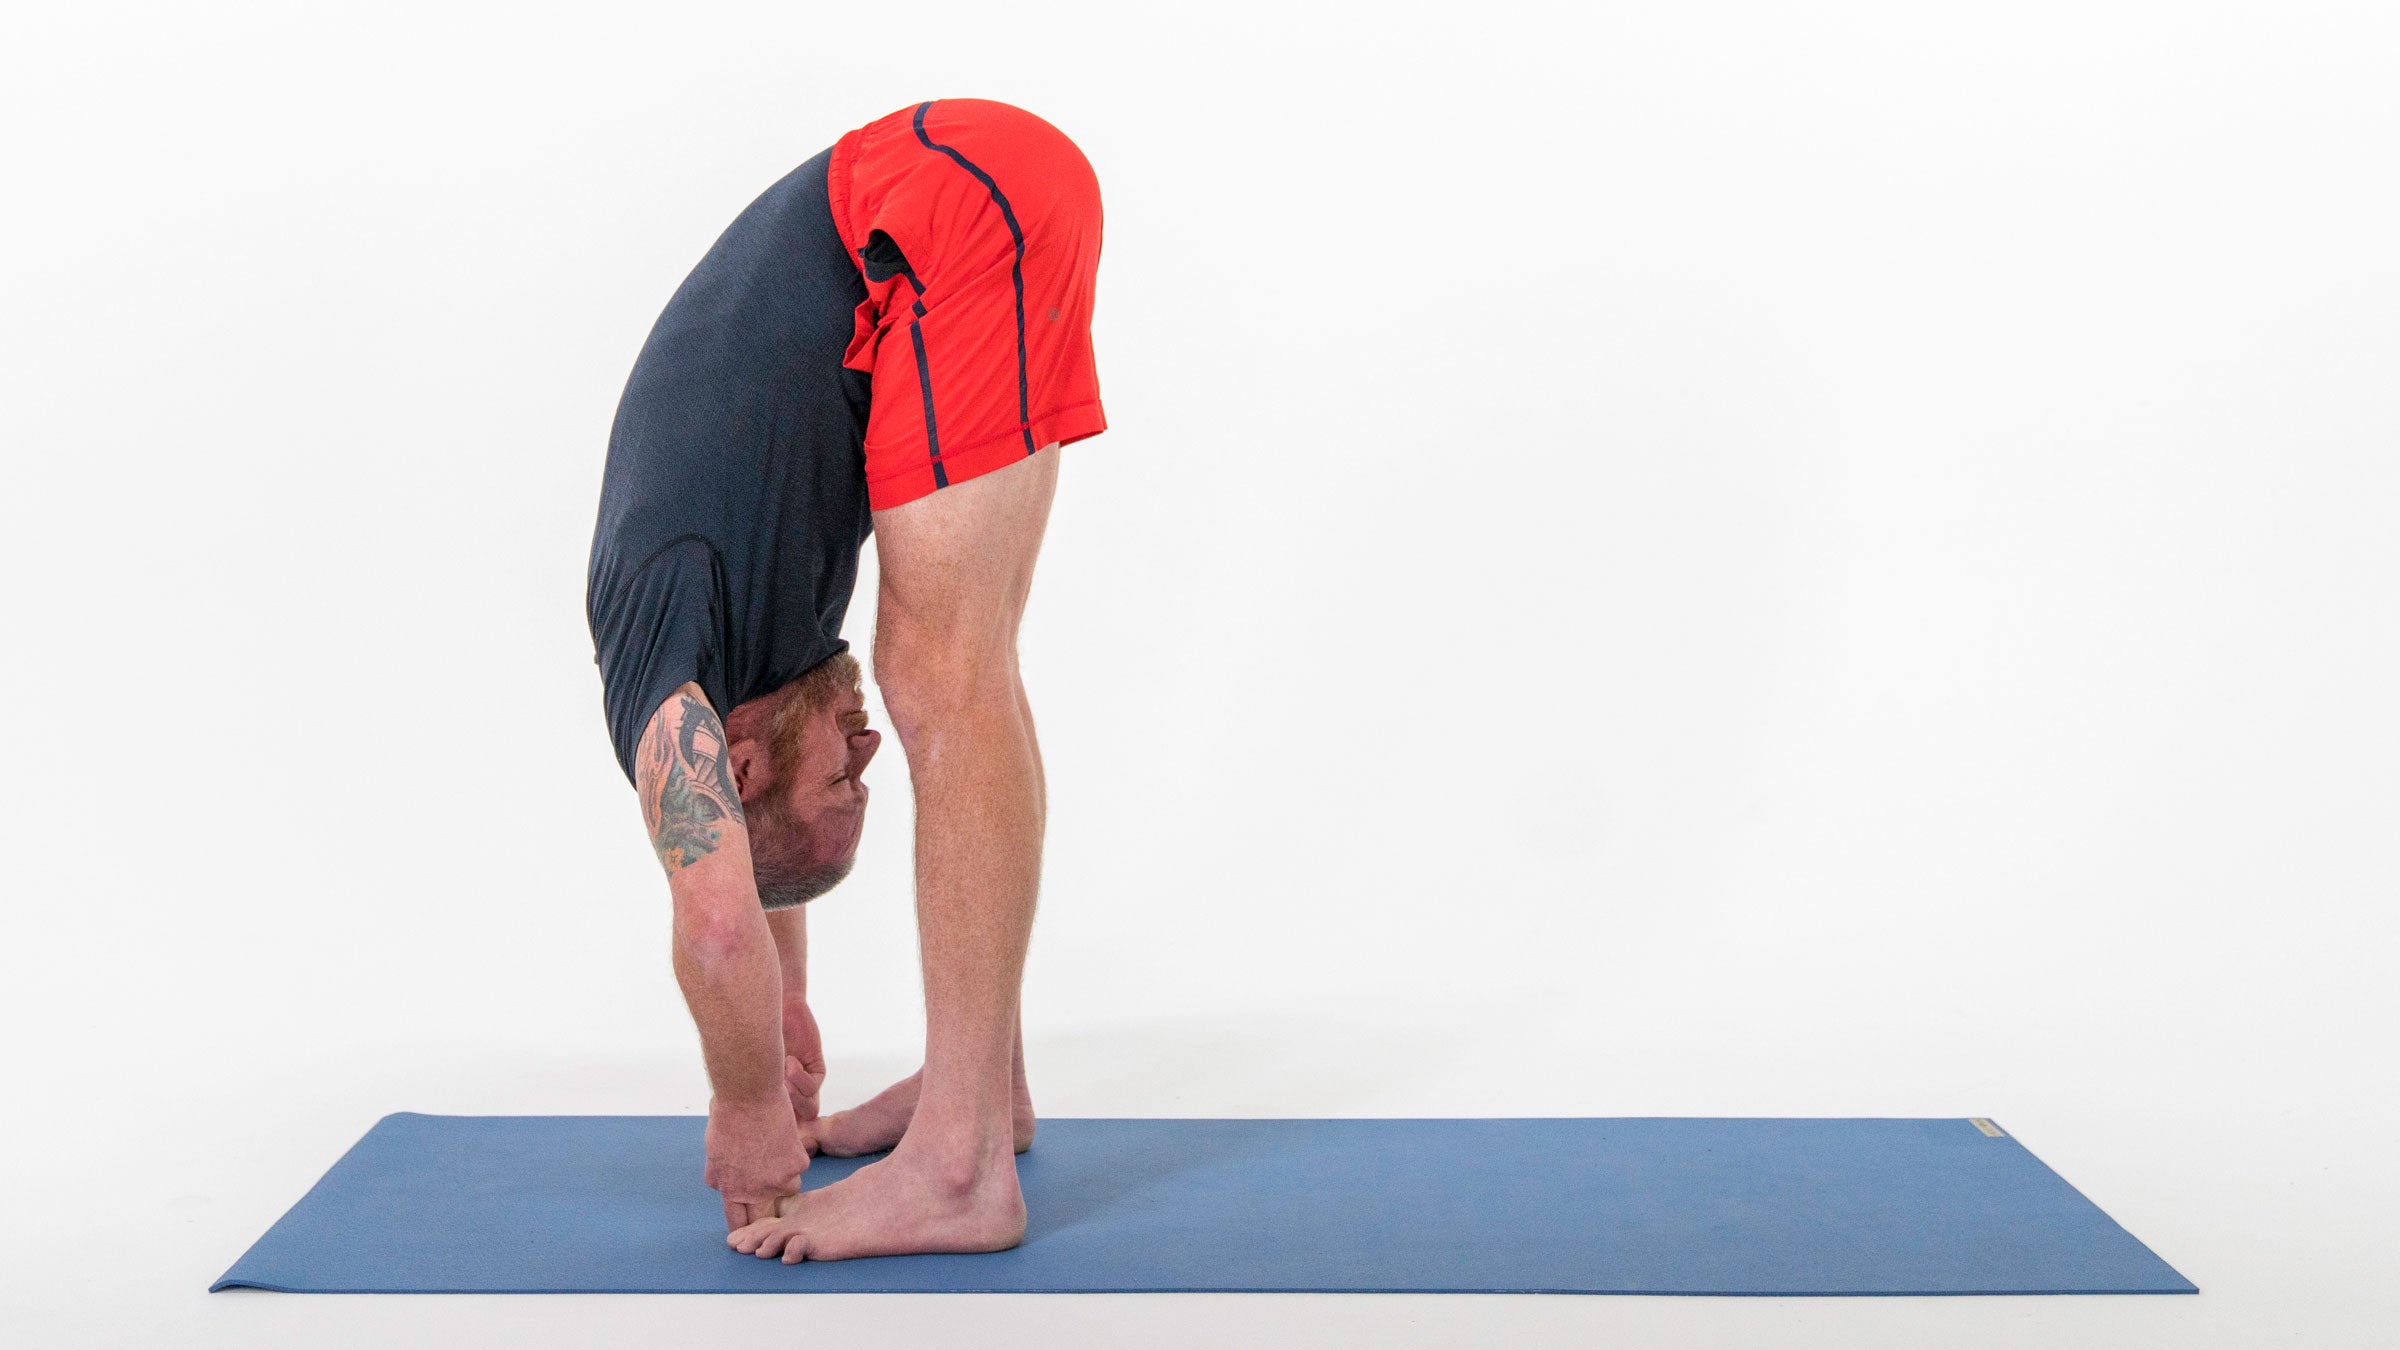 STANDING Yoga Poses | Pose Directory | YogaClassPlan.com